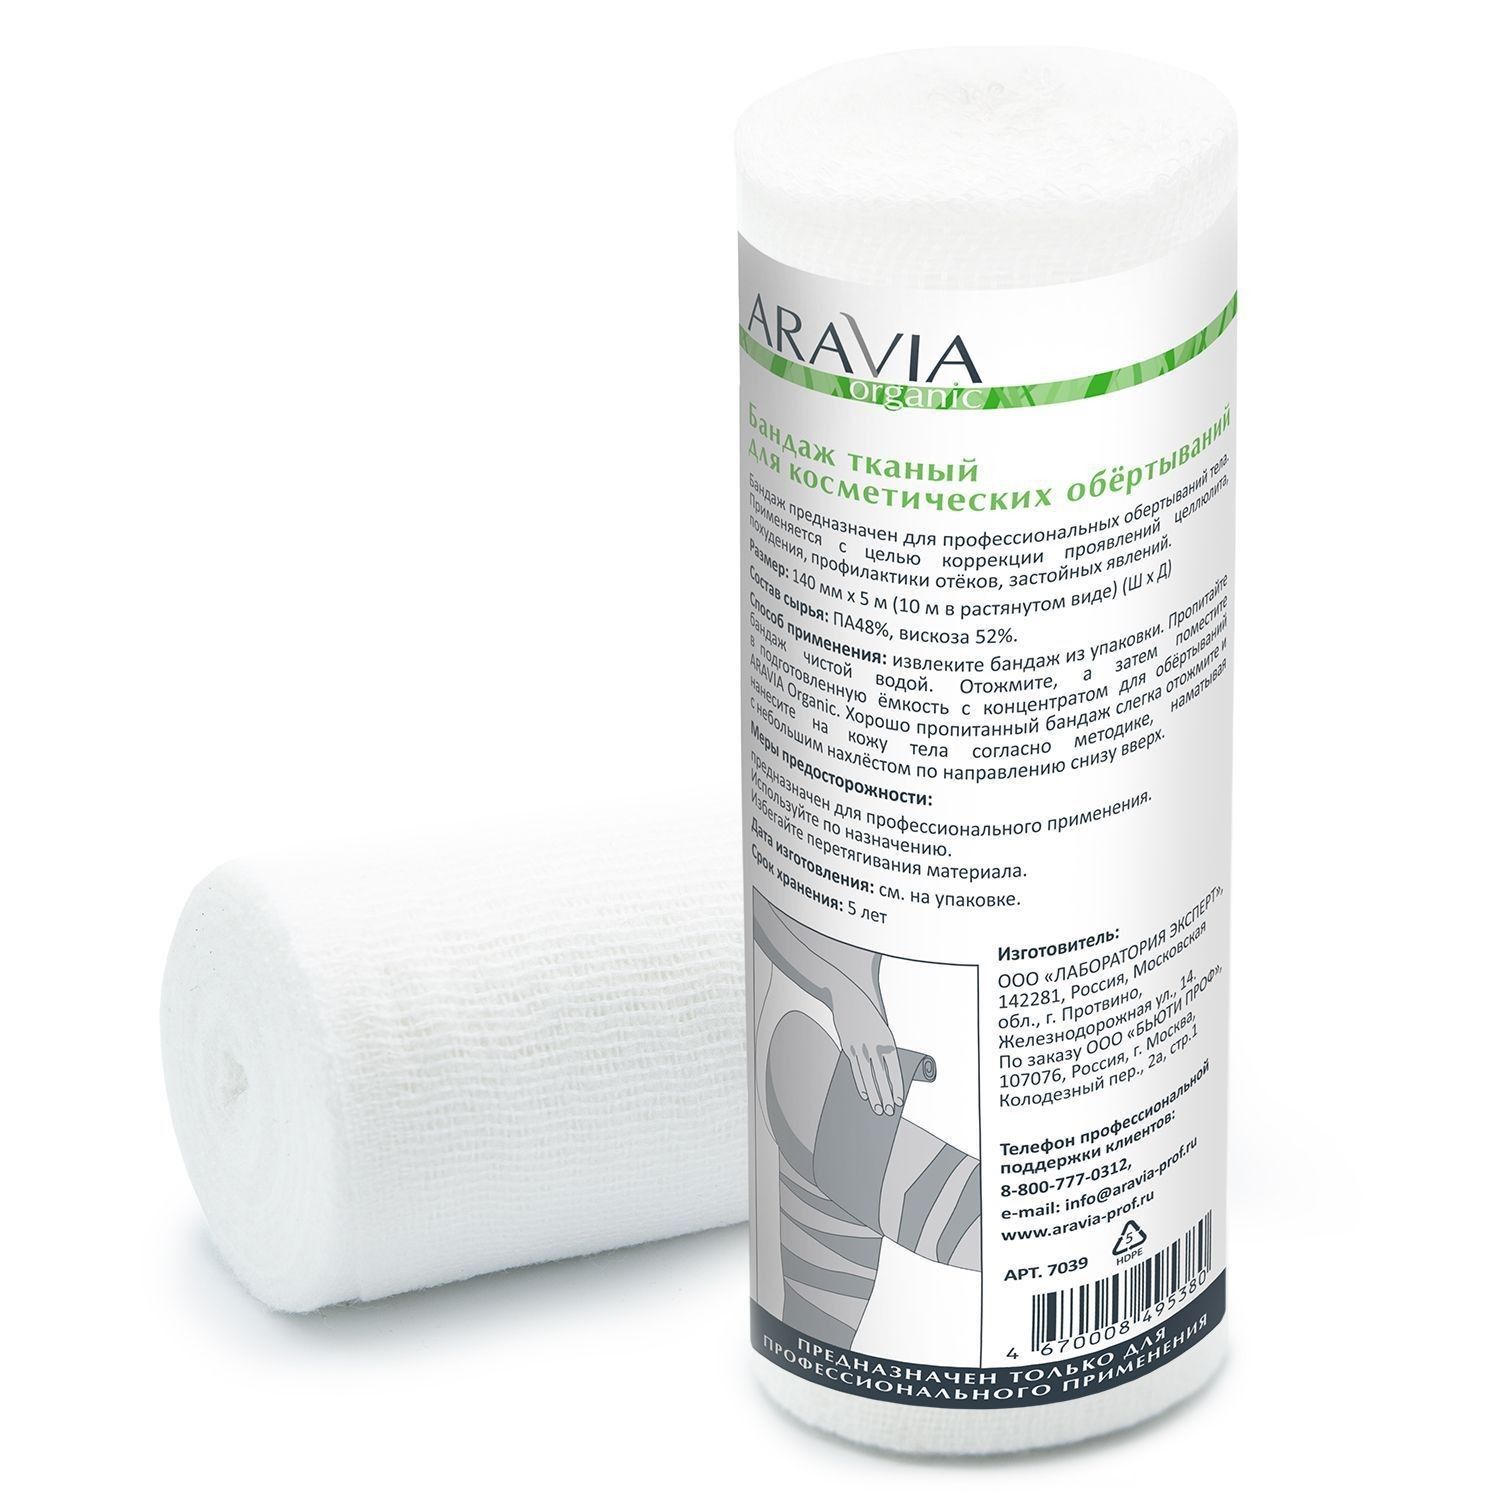 Бандаж для косметических обертываний Aravia Professional тканный 14 см x 10 м aravia бандаж тканный для косметических обертываний organic 14 см x 10 м